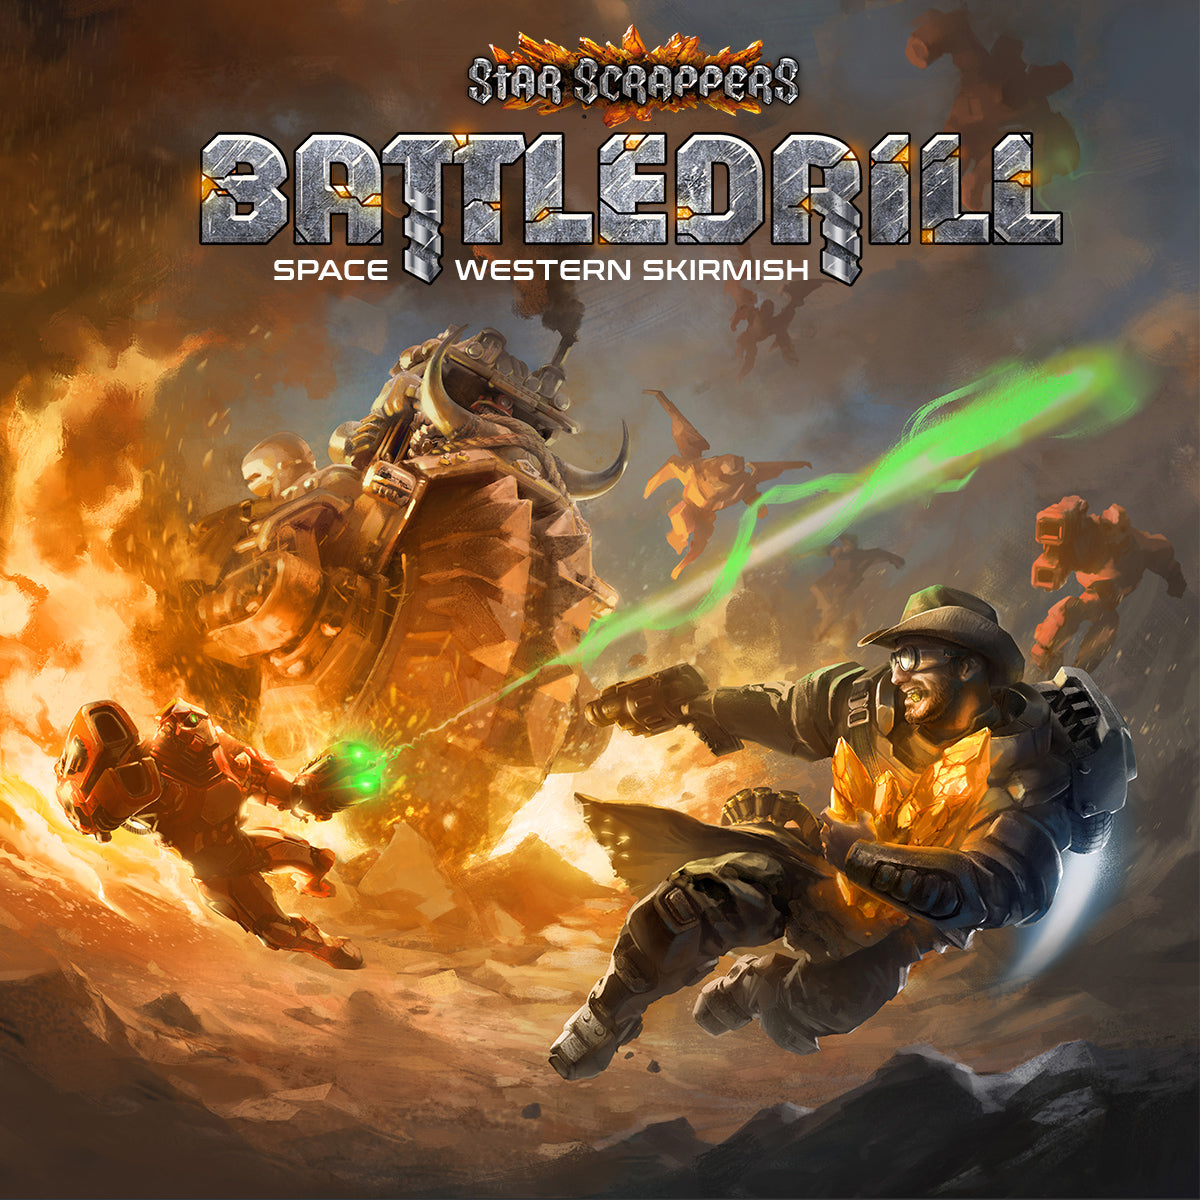 Rockgrinder Bioss Fraktion Battledrill Kickstarter Brettspiele, Rollenspiel Maler